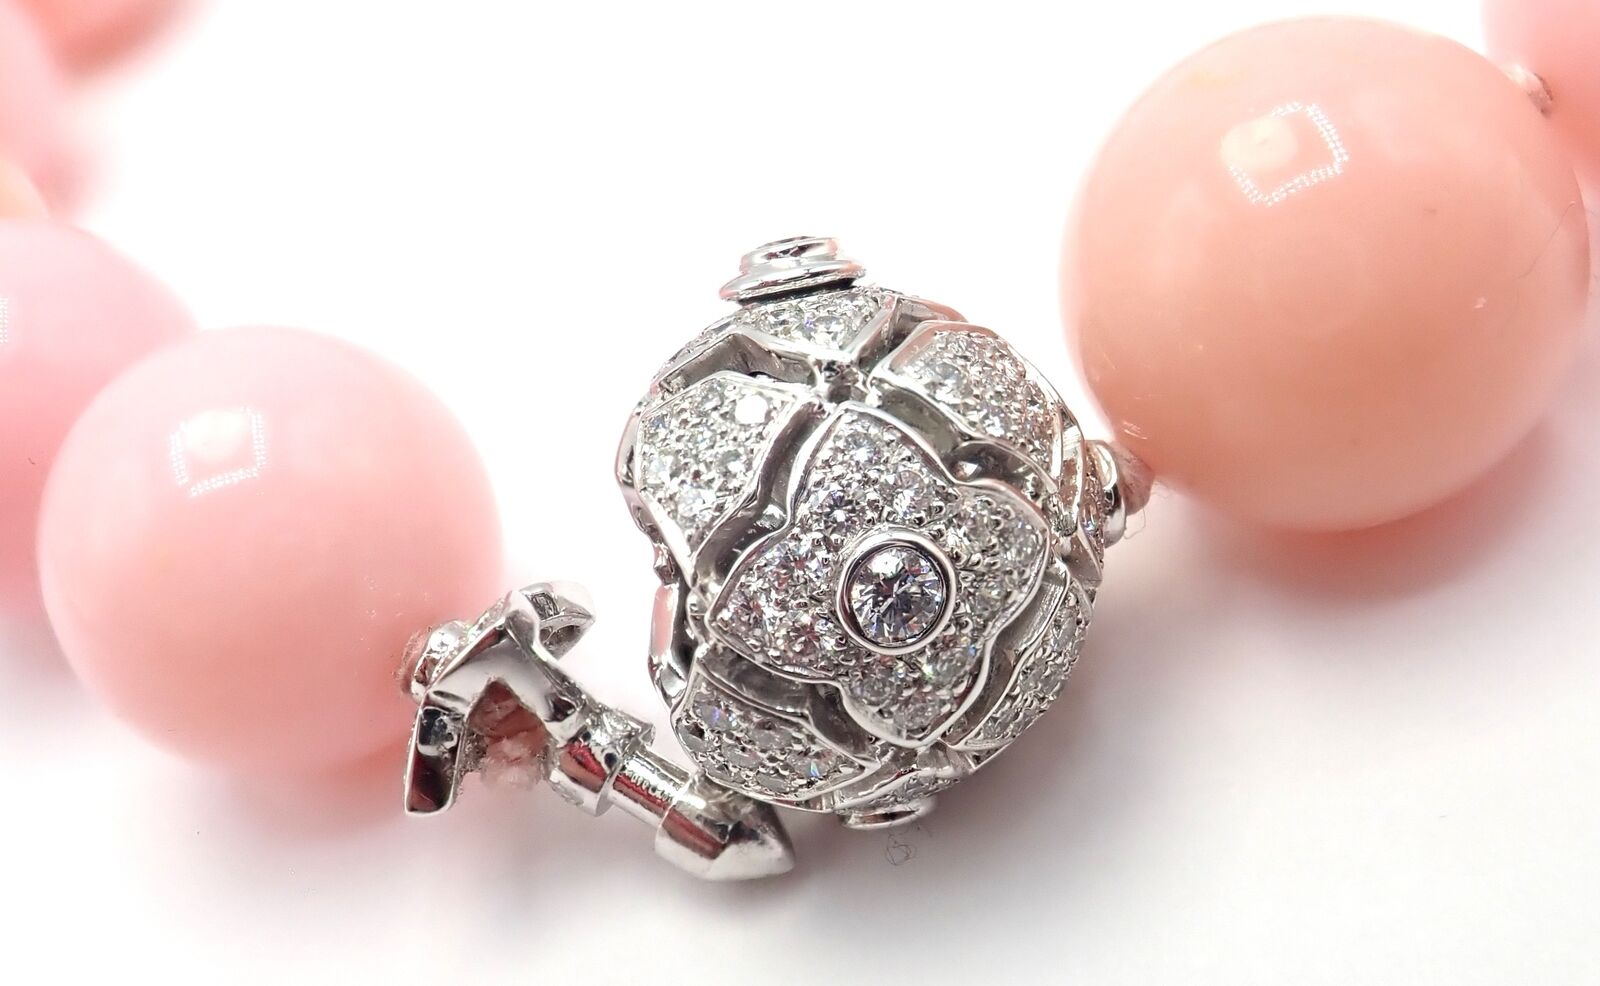 Van Cleef & Arpels Jewelry & Watches:Fine Jewelry:Necklaces & Pendants Authentic! Van Cleef & Arpels 18k Wh. Gold Large Pink Opal Diamond Necklace Cert